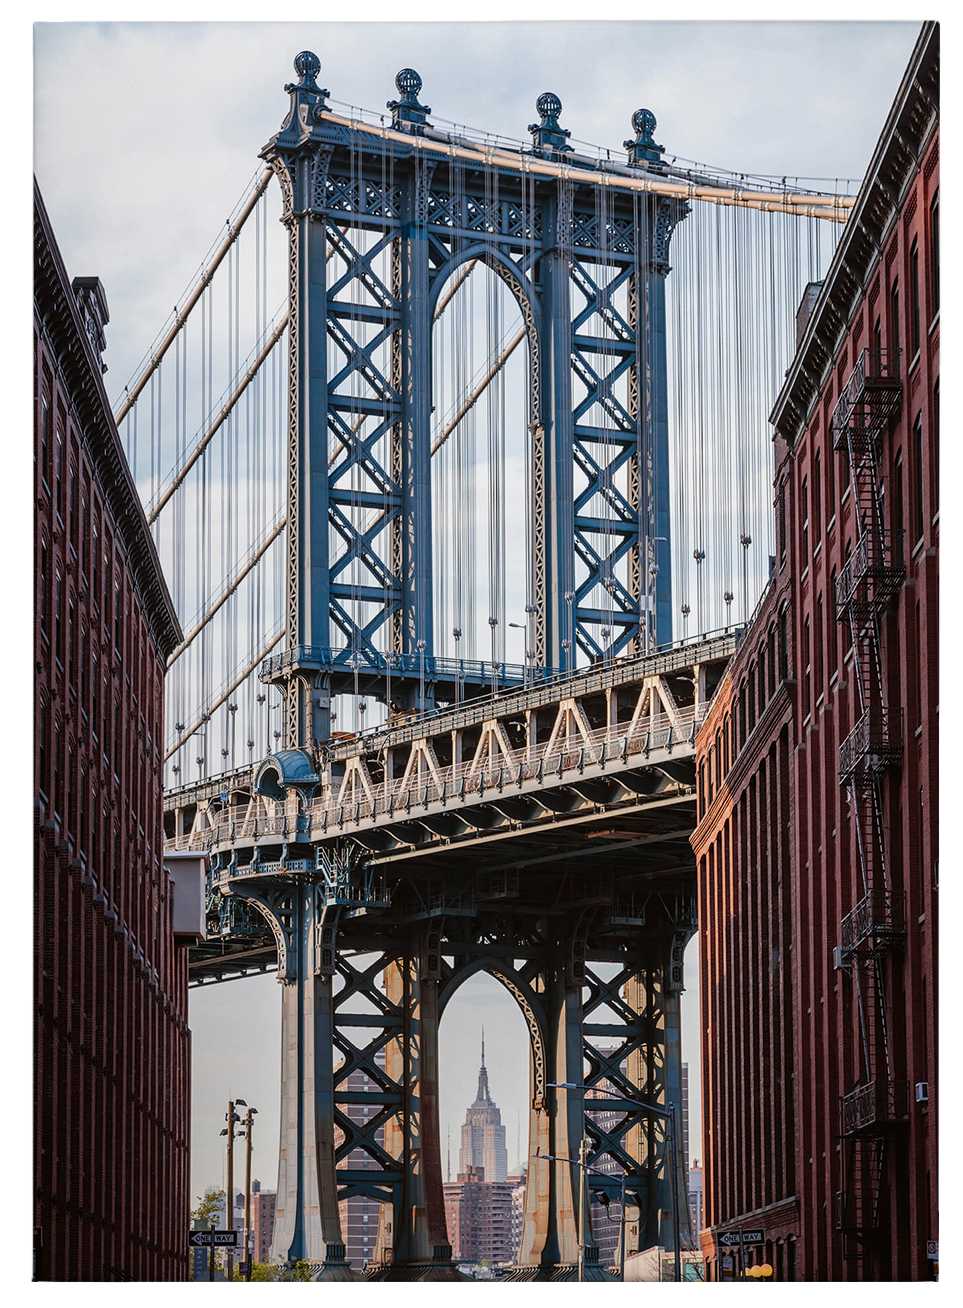             Quadro su tela New York Brooklyn Bridge, foto di Colombo - 0,70 m x 0,50 m
        